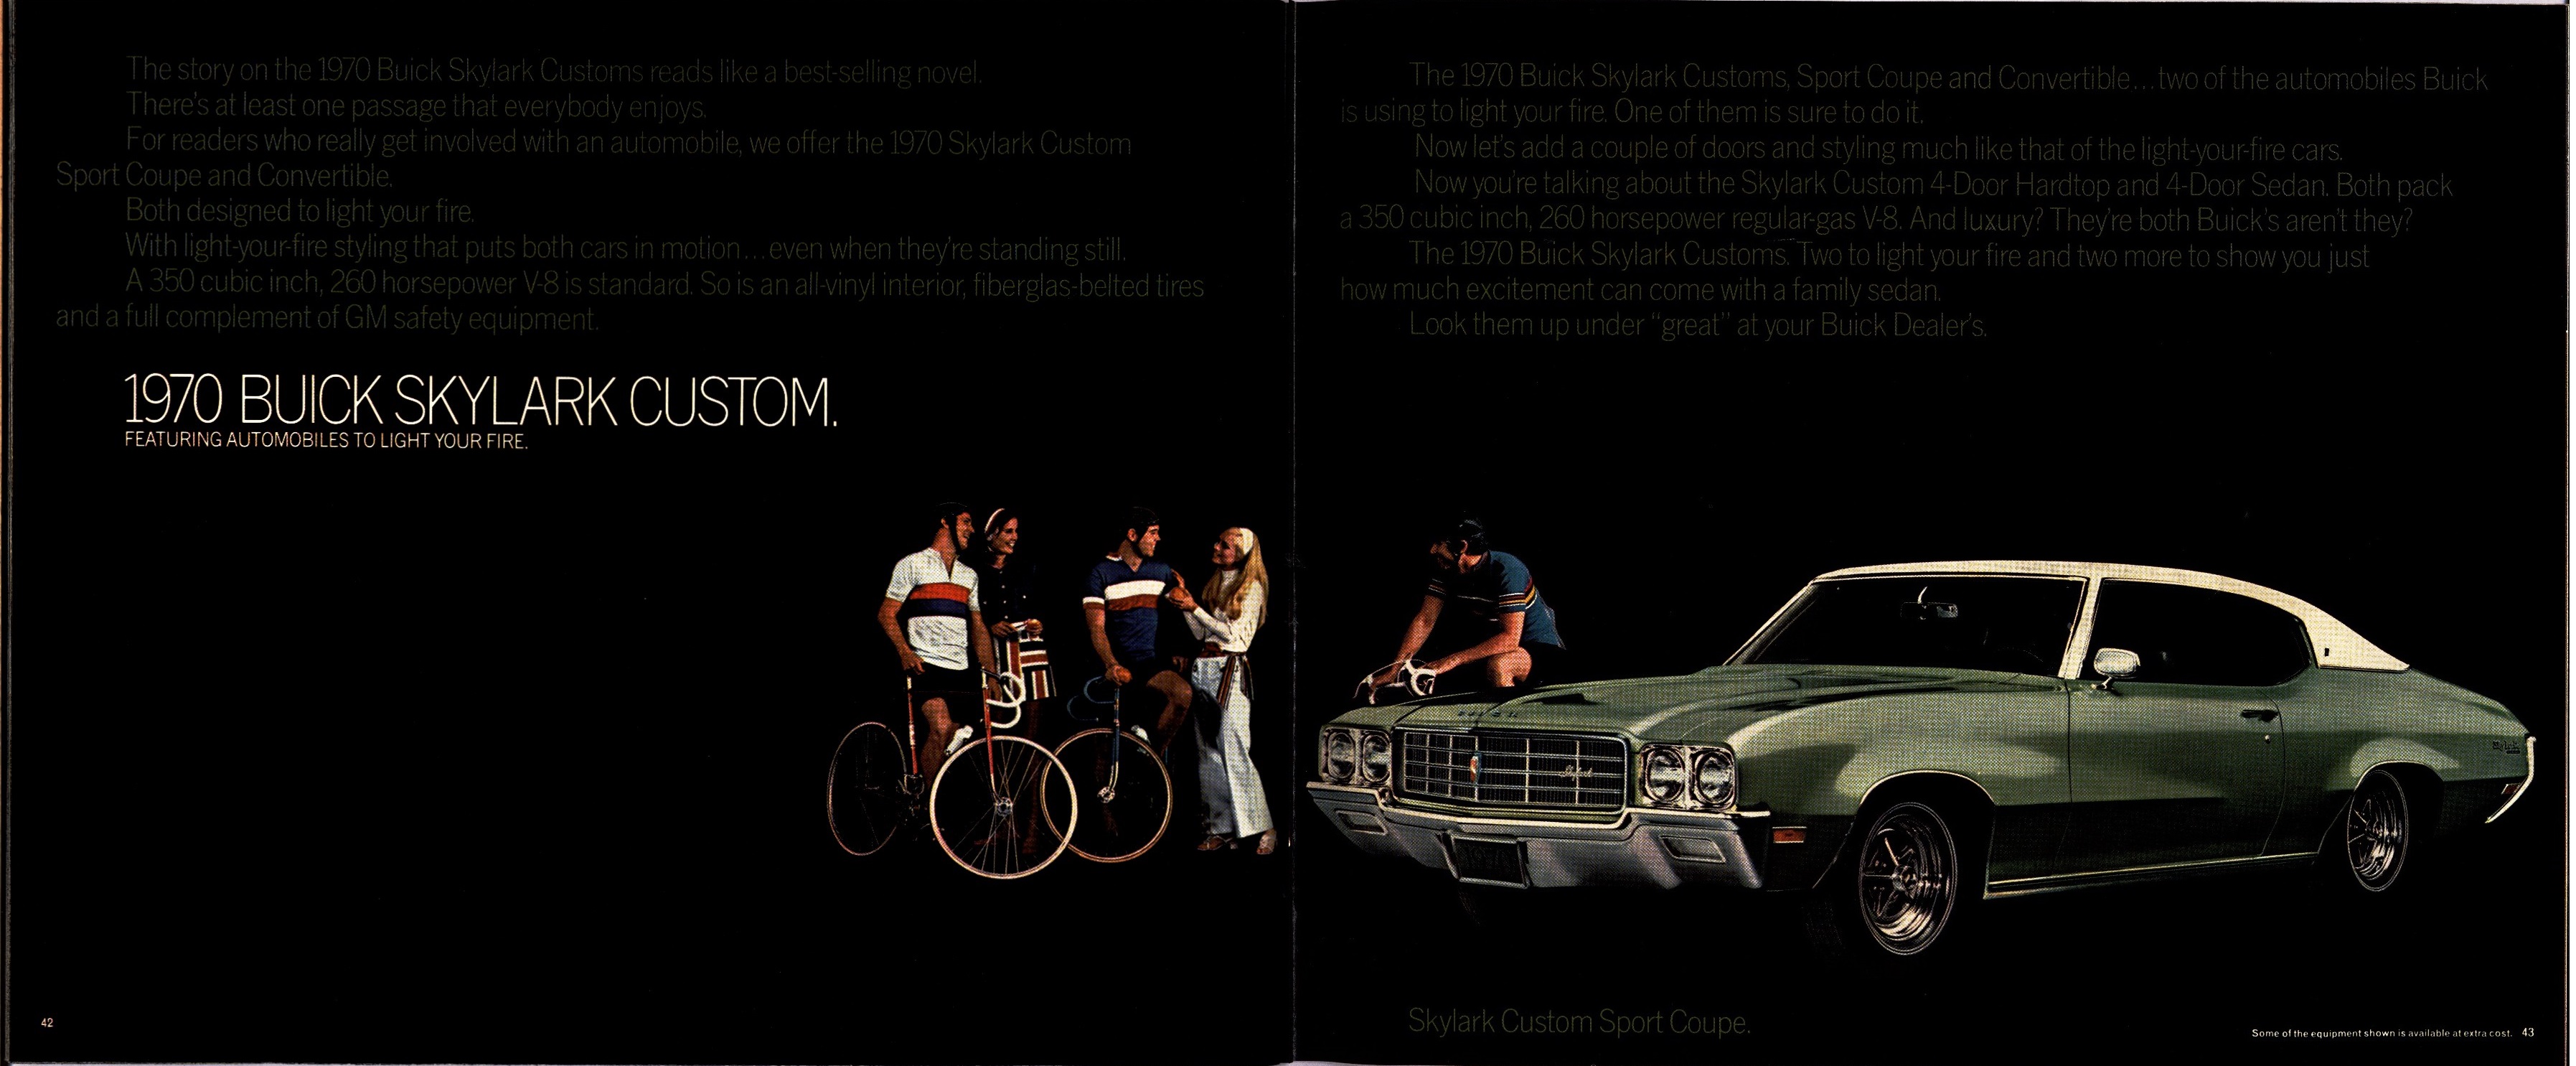 1970 Buick Full Line Prestige Brochure 42-43